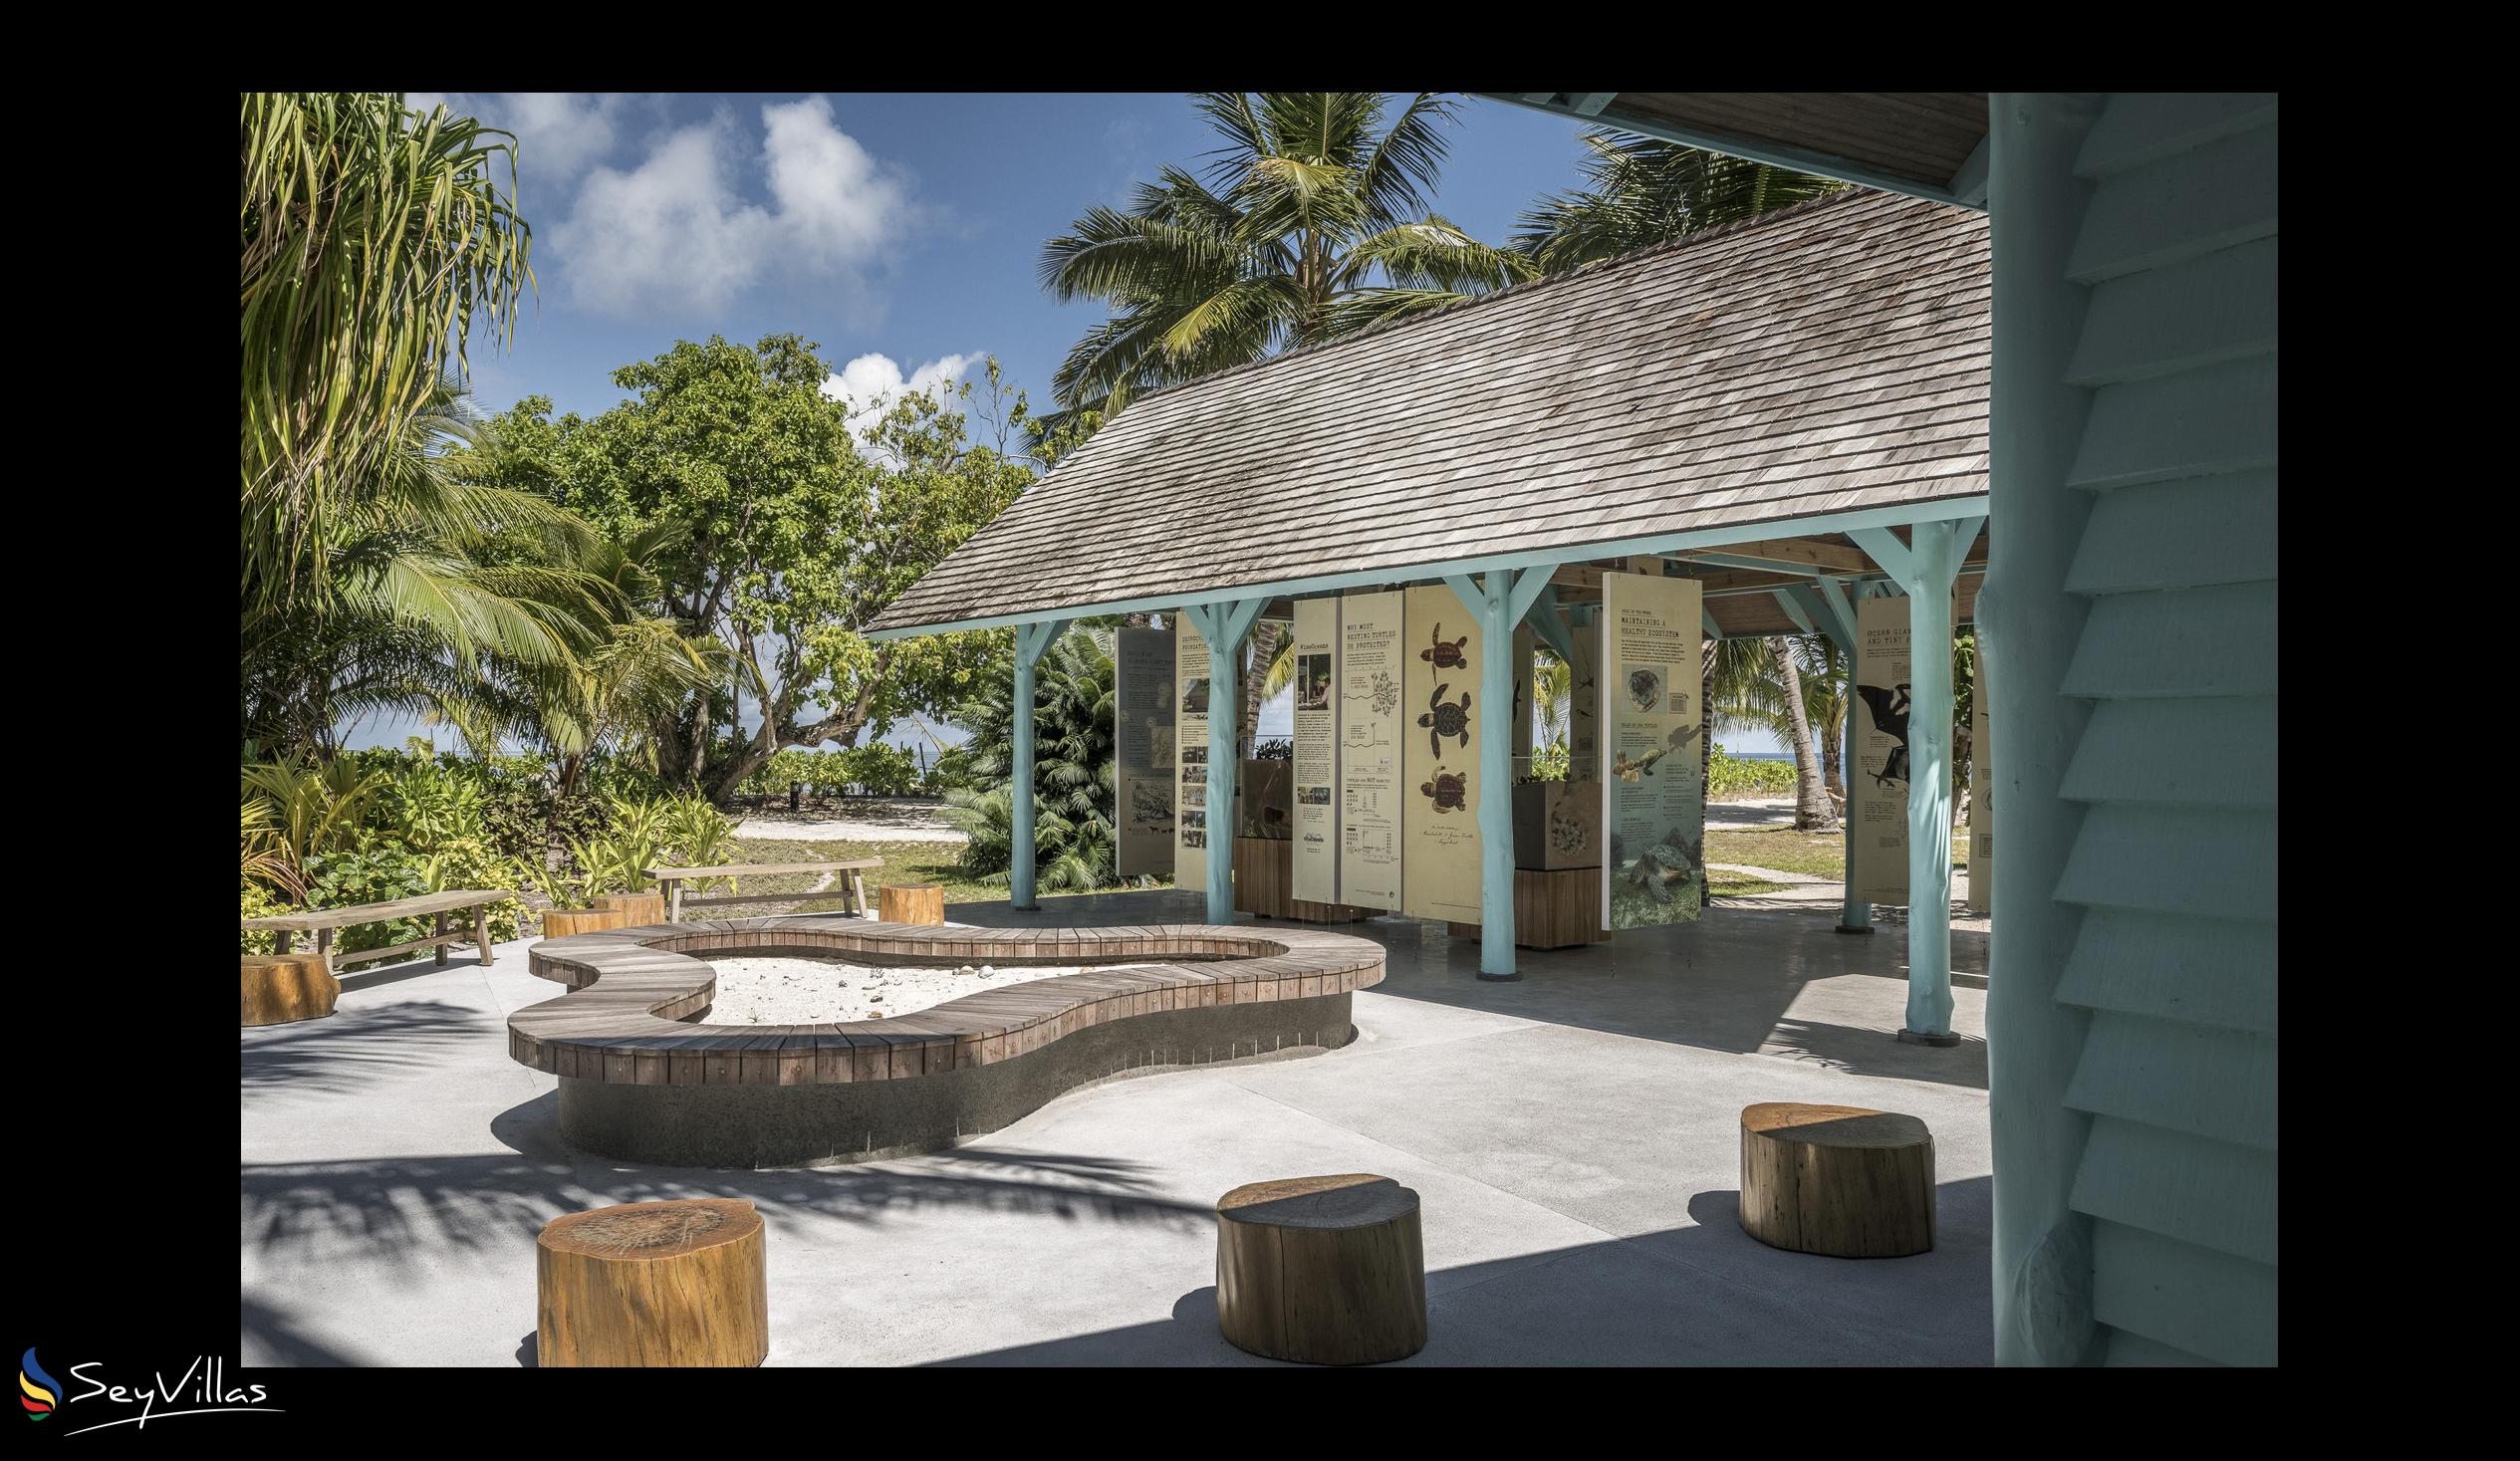 Foto 41: Four Seasons Resort Desroches Island - Intérieur - Desroches Island (Seychelles)